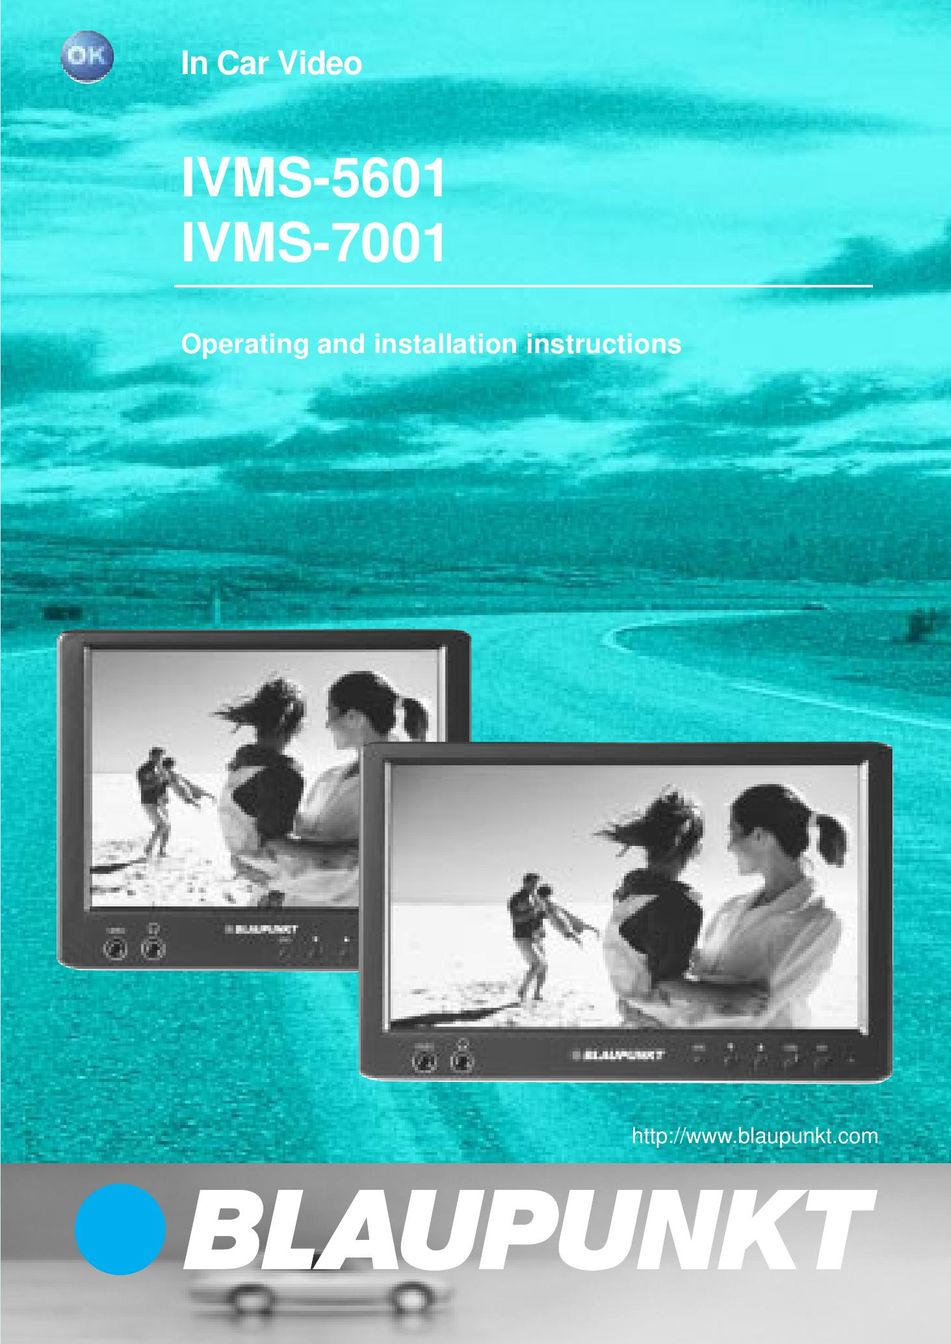 Blaupunkt IVMS-7001 Car Video System User Manual